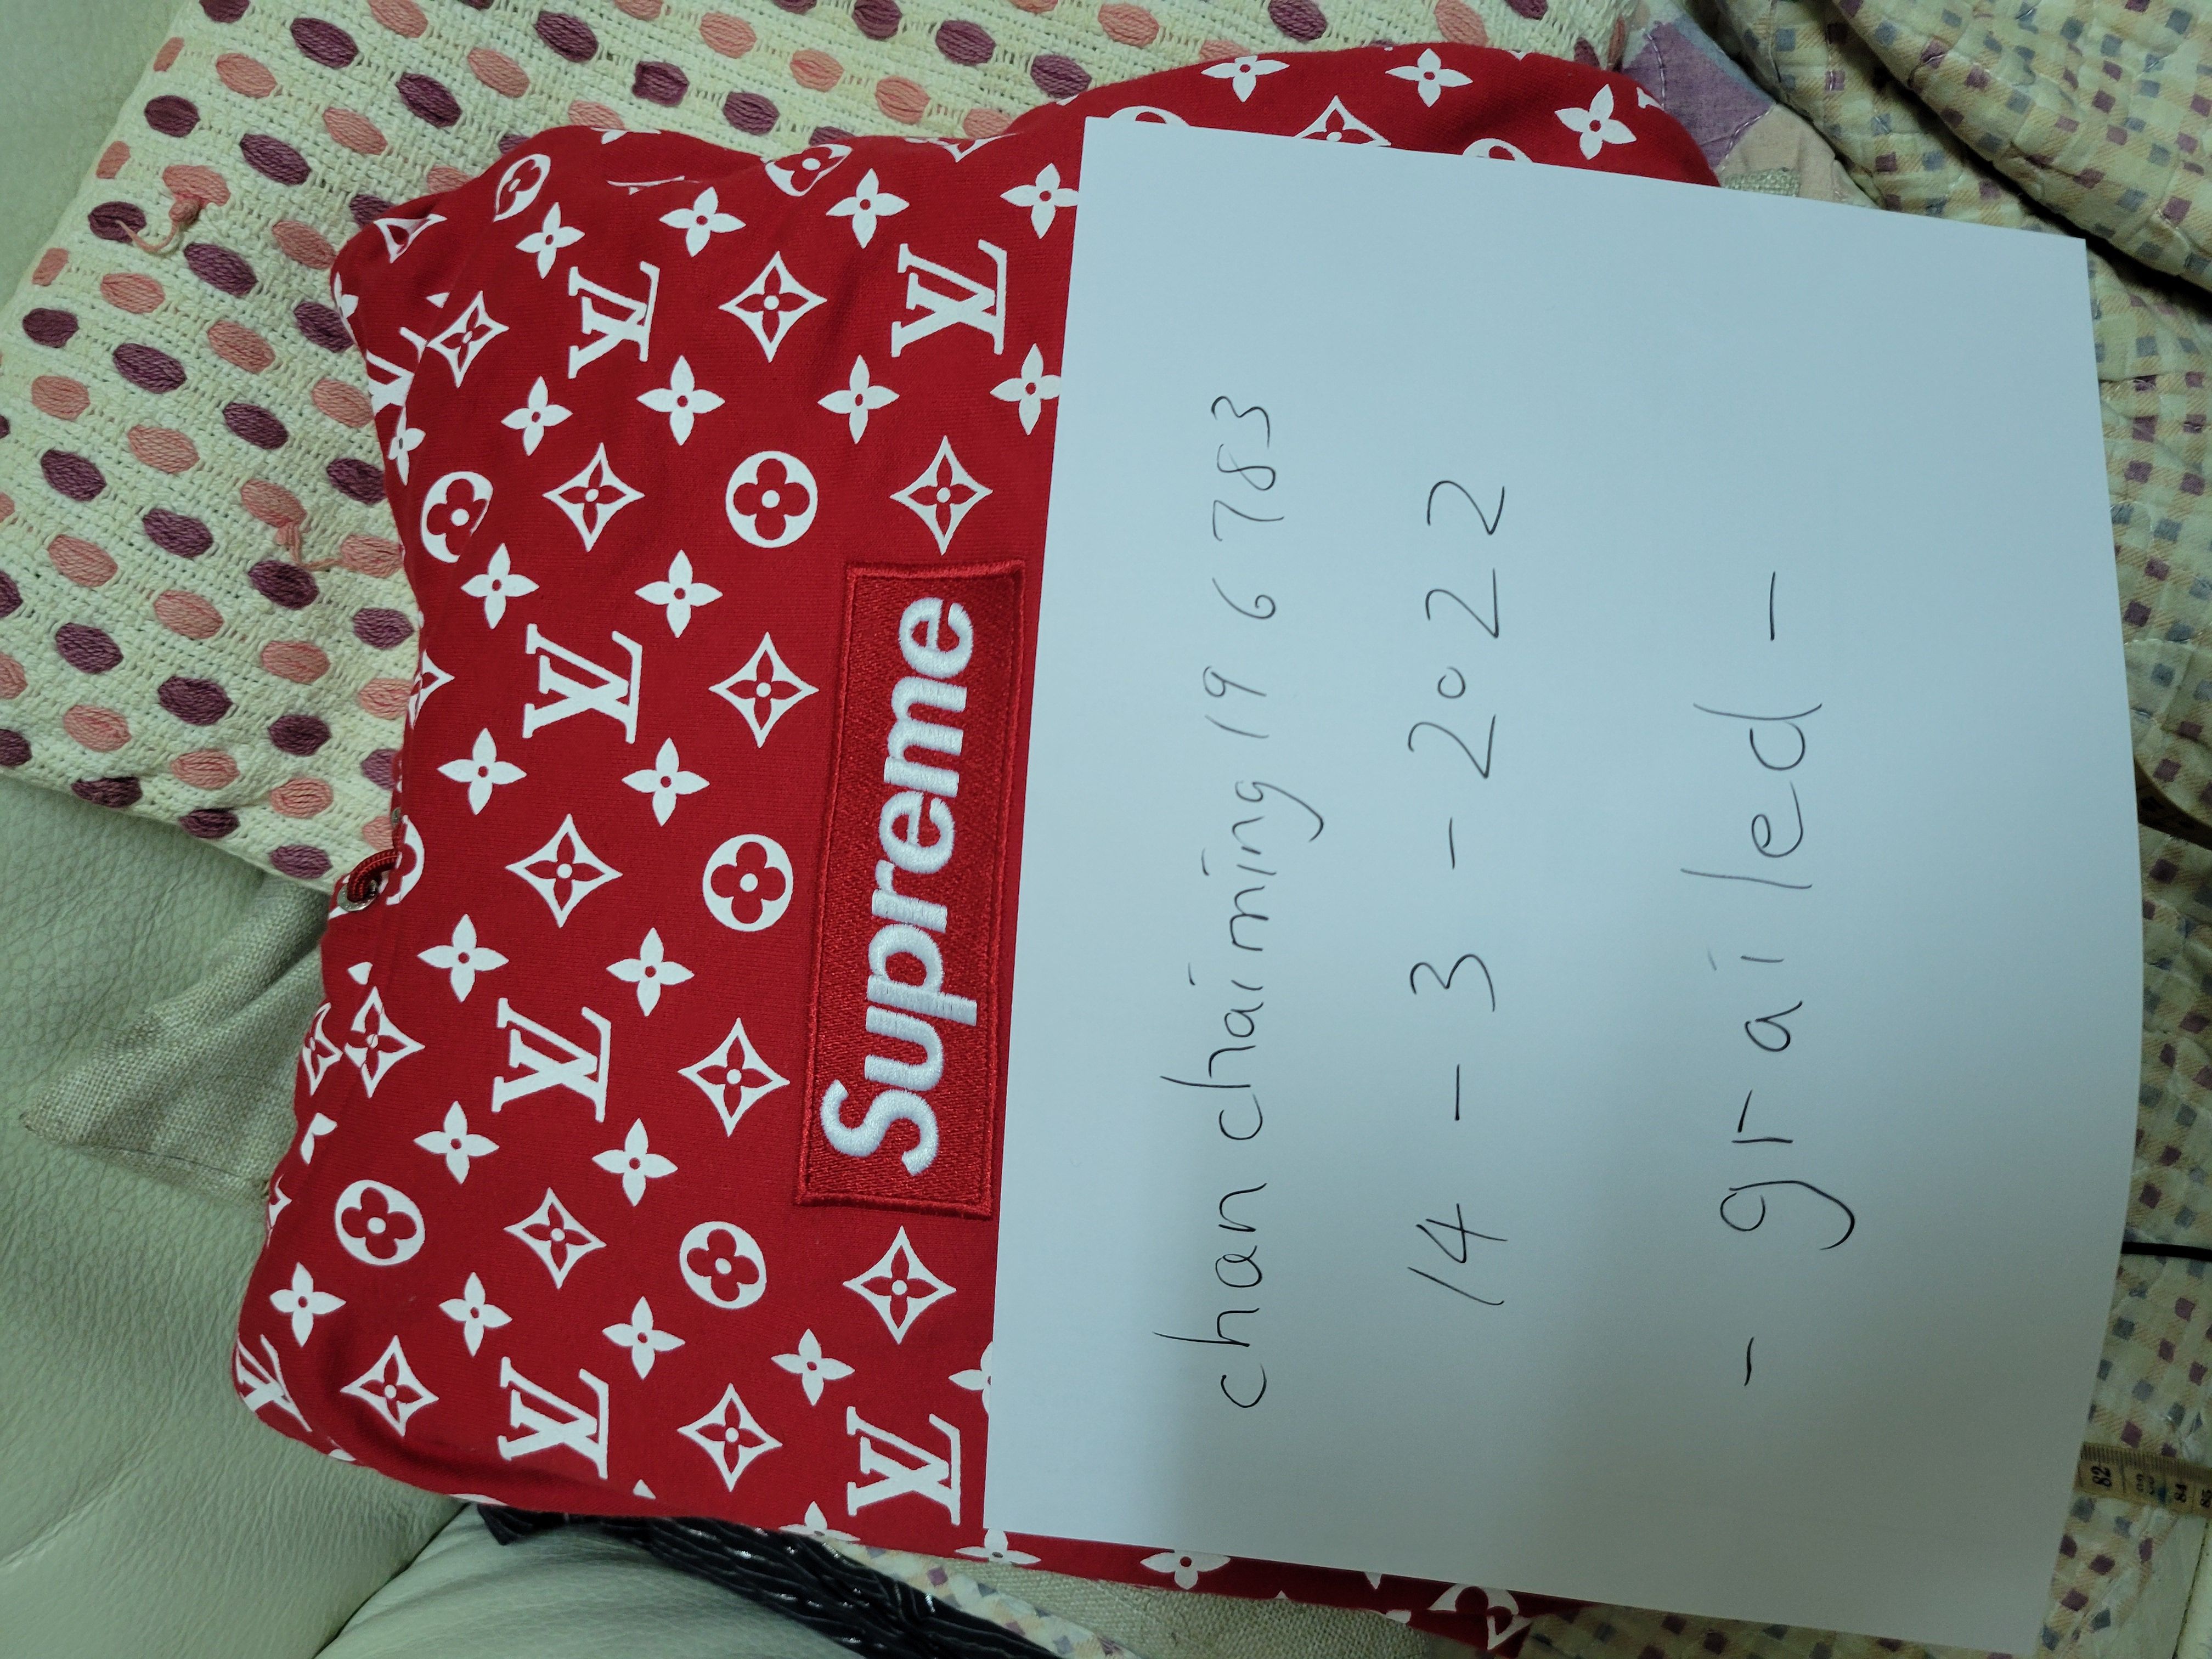 LOUIS VUITTON x SUPREME BOX LOGO HOODIE RED SS17 - Stay Fresh